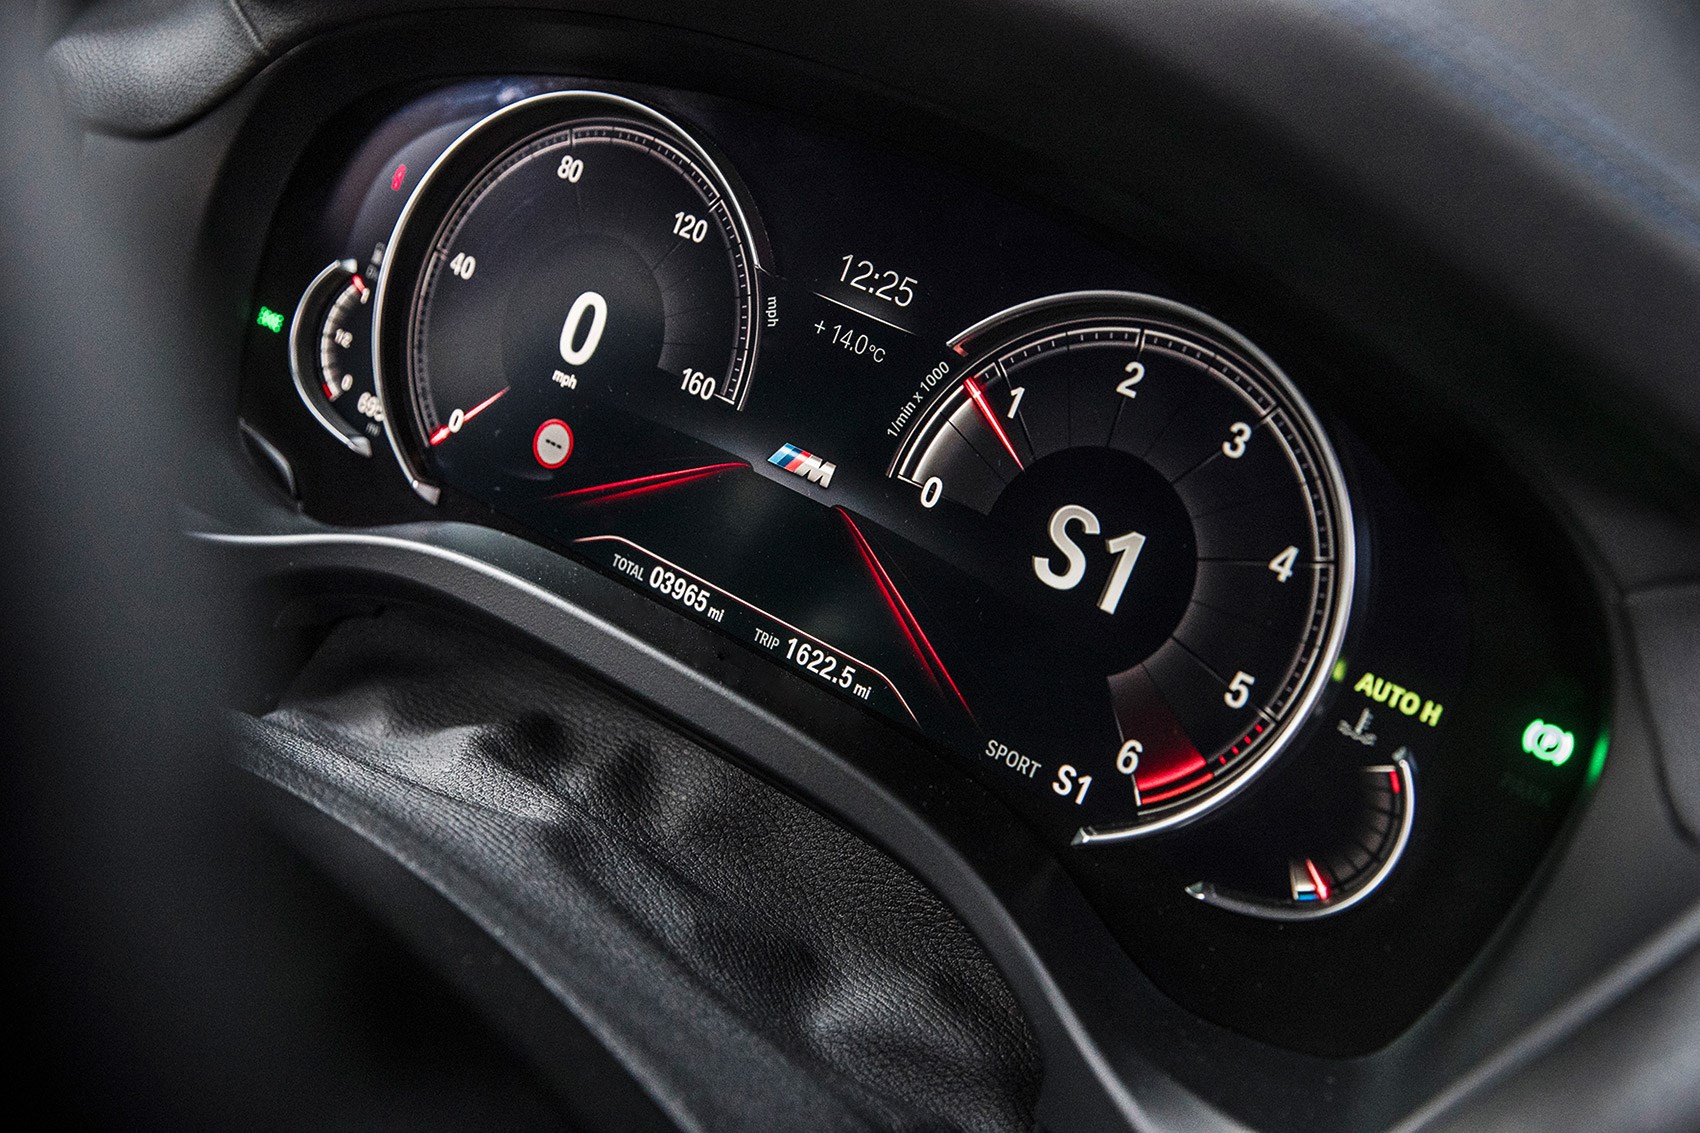 New Bmw X3 Vs Audi Q5 Vs Mercedes Glc Triple Test Review